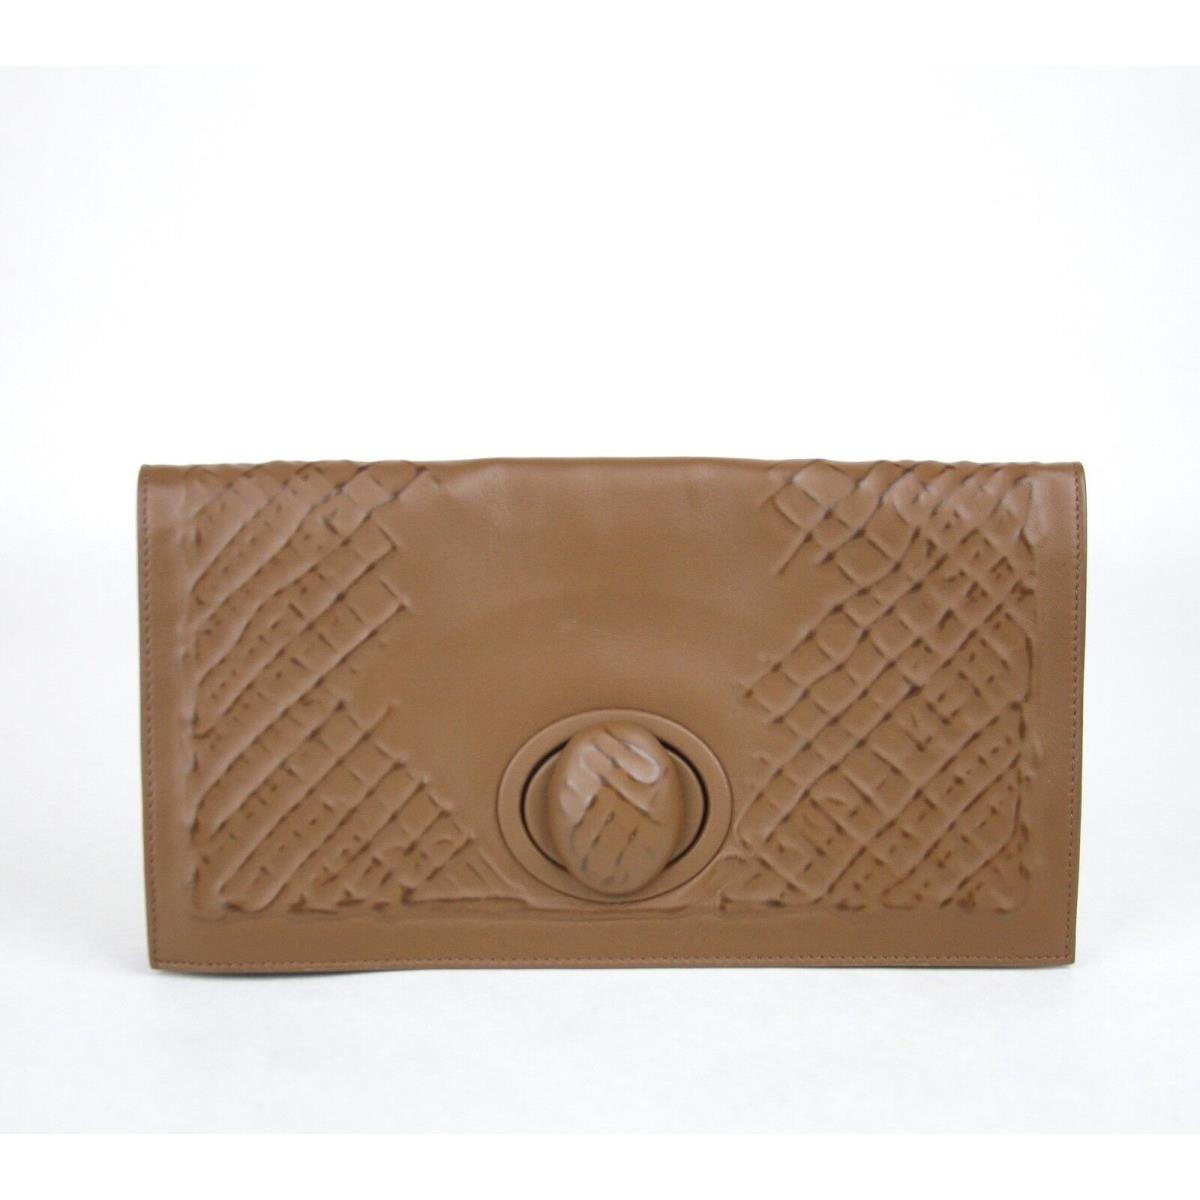 Bottega Veneta Leather Clutch Bag Handbag Brown 301233 2517